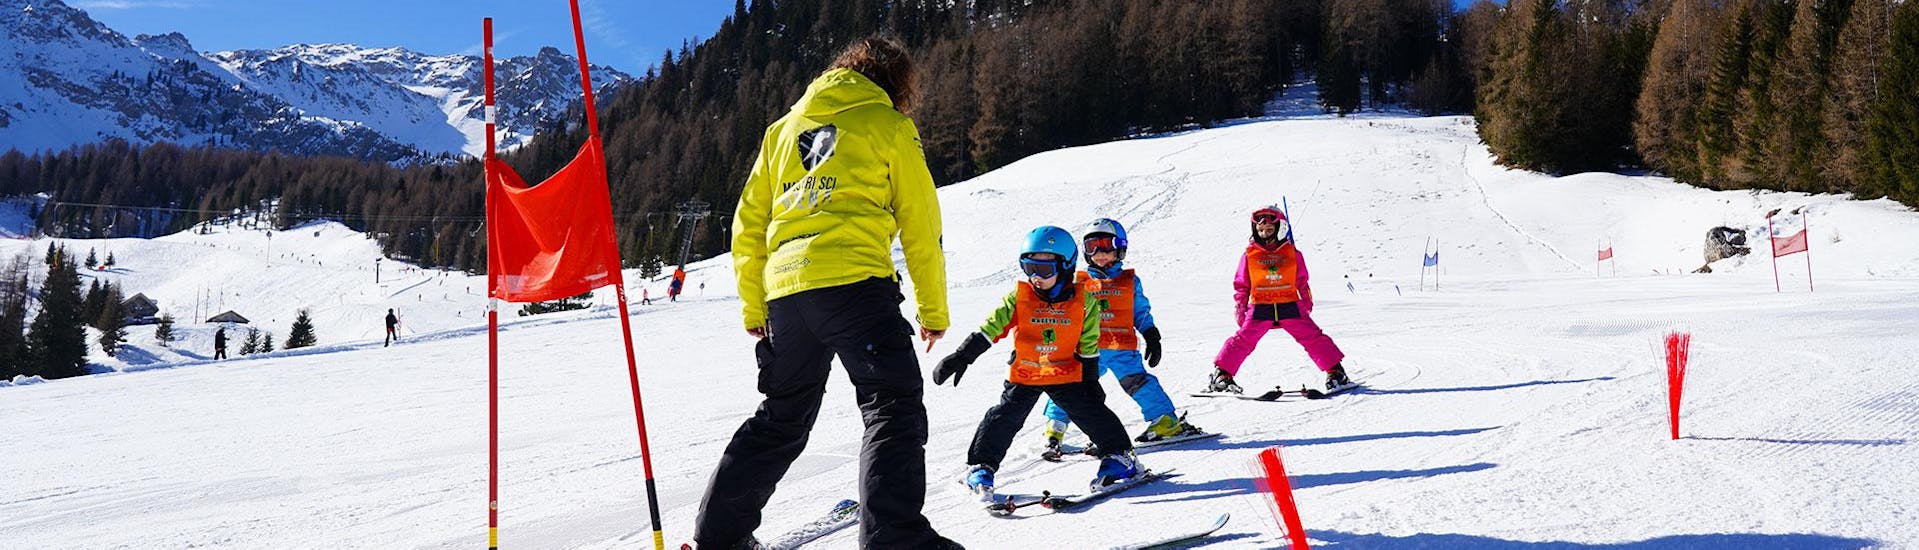 kids-ski-lessons-3-5-y-for-beginners-maestri-di-sci-moena-hero